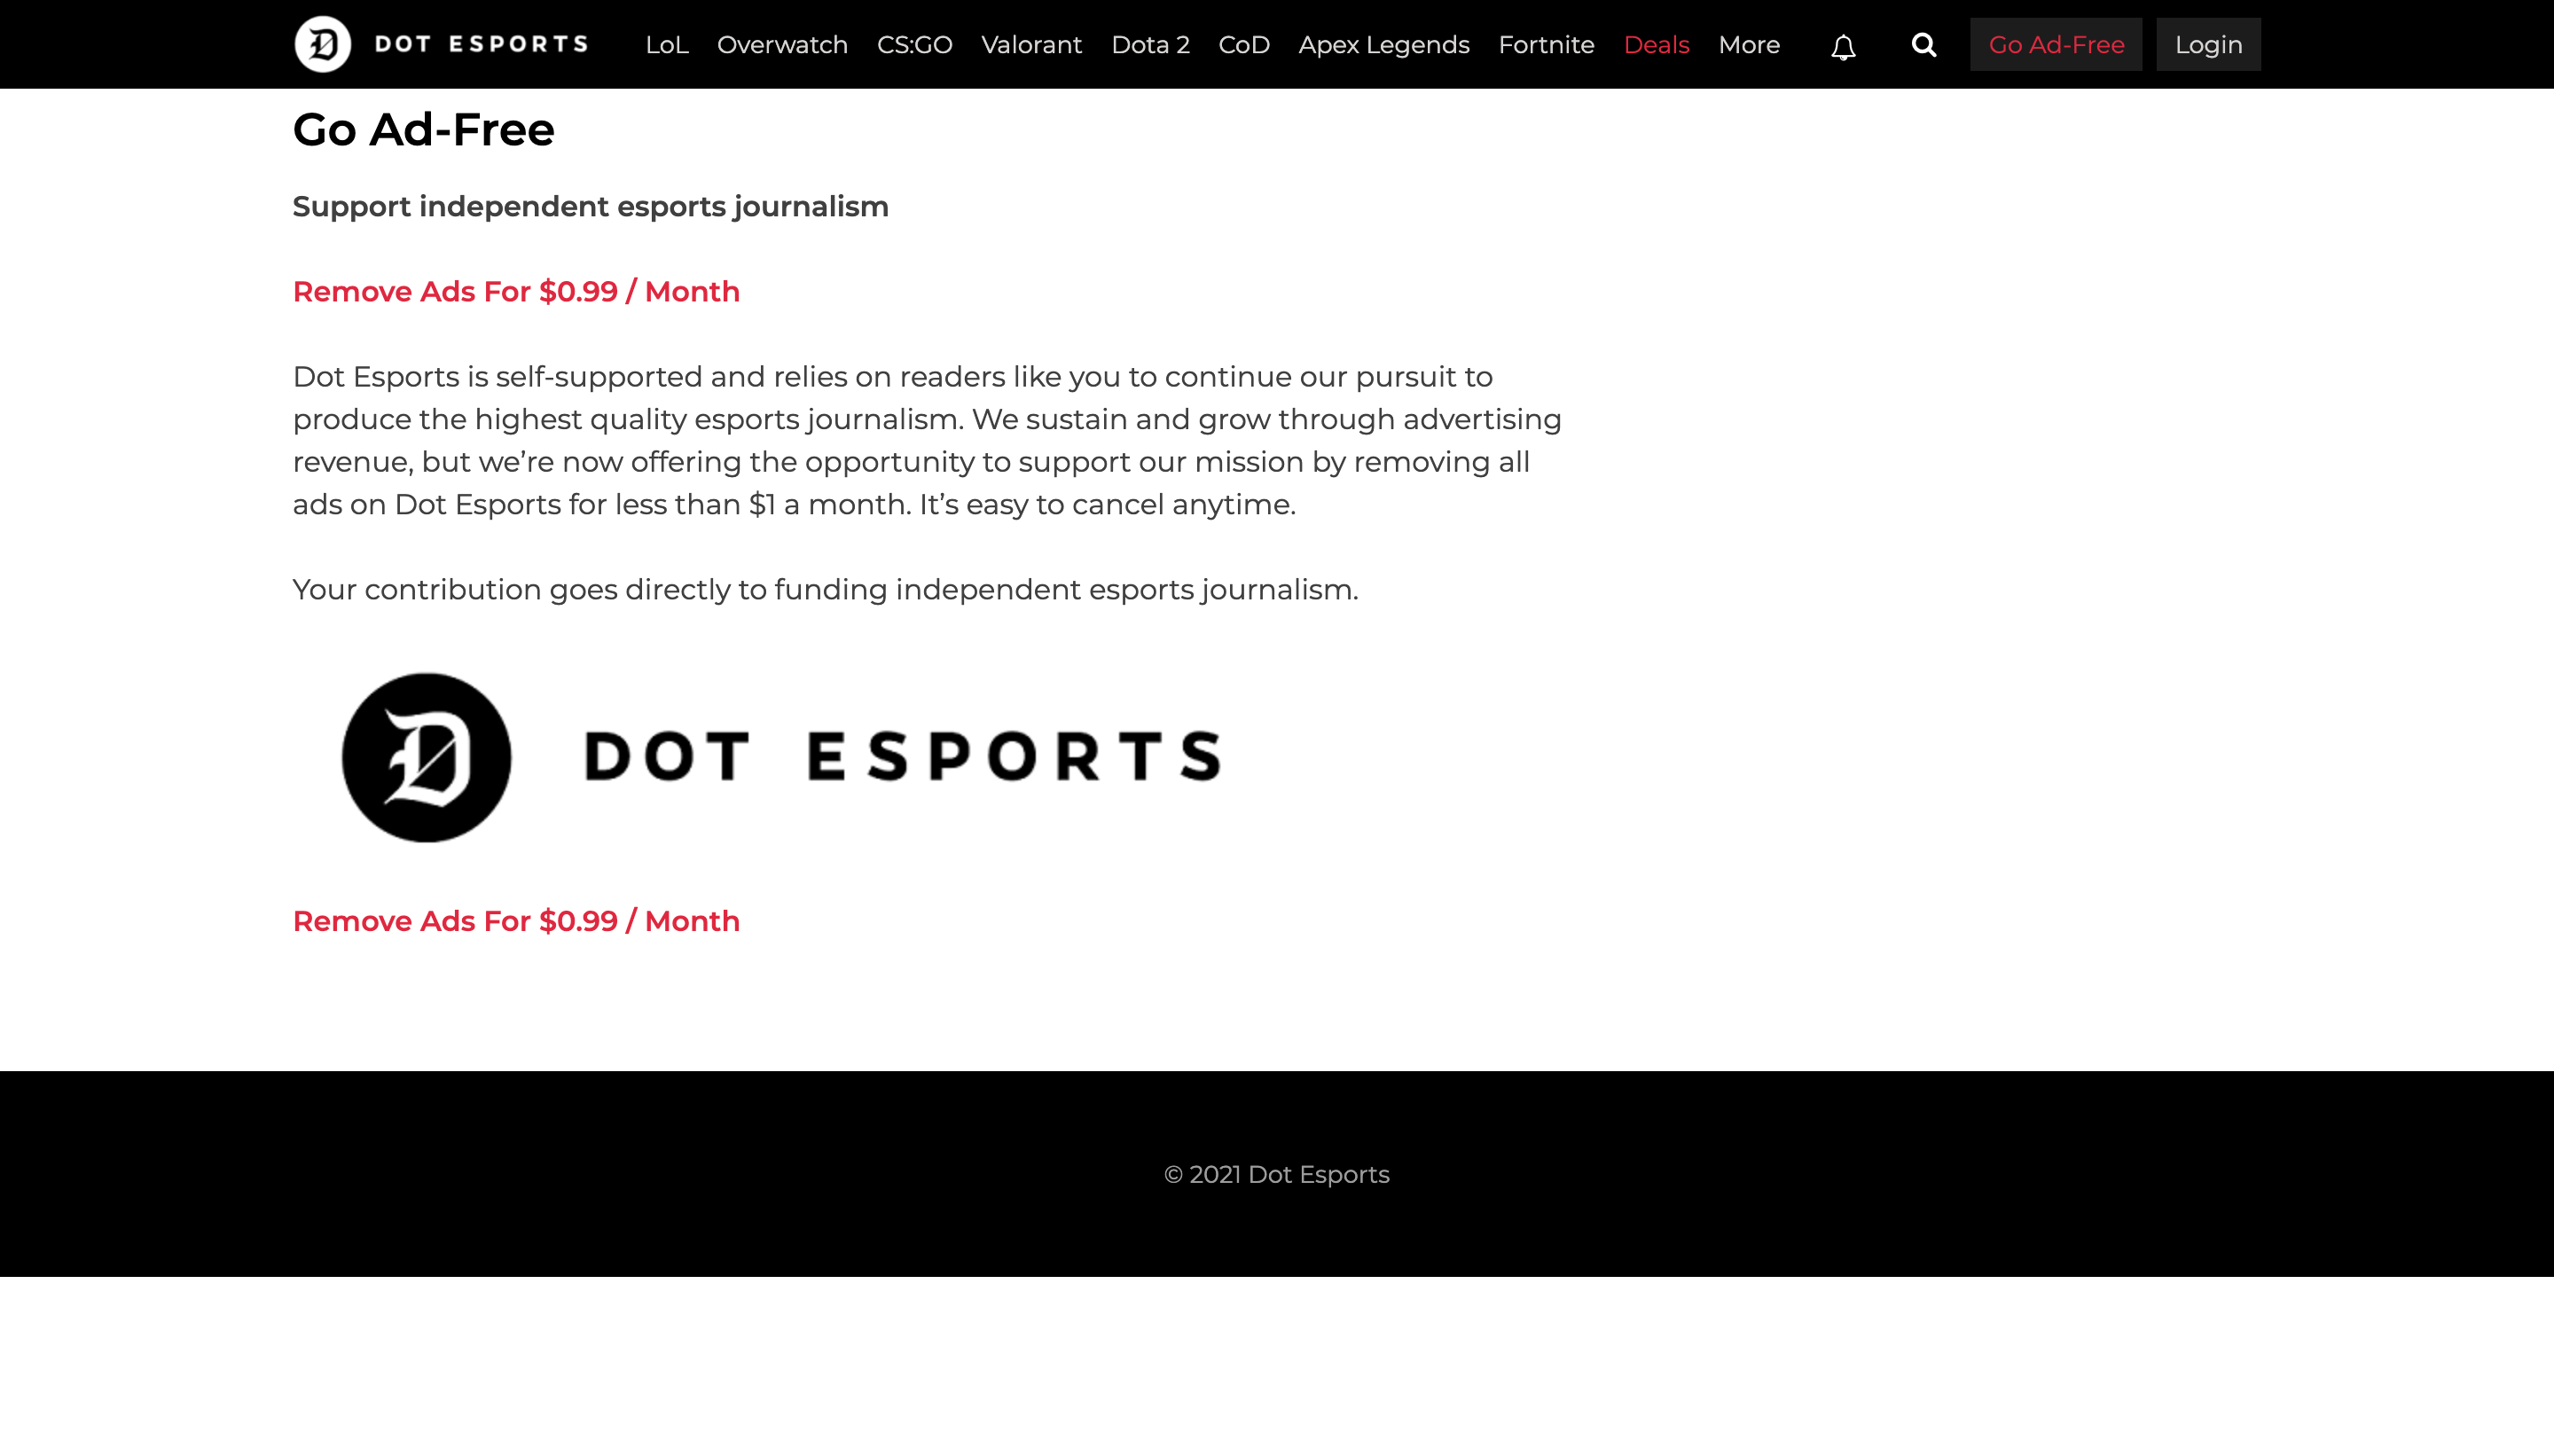 Dot Esports Membership Pricing Information Page